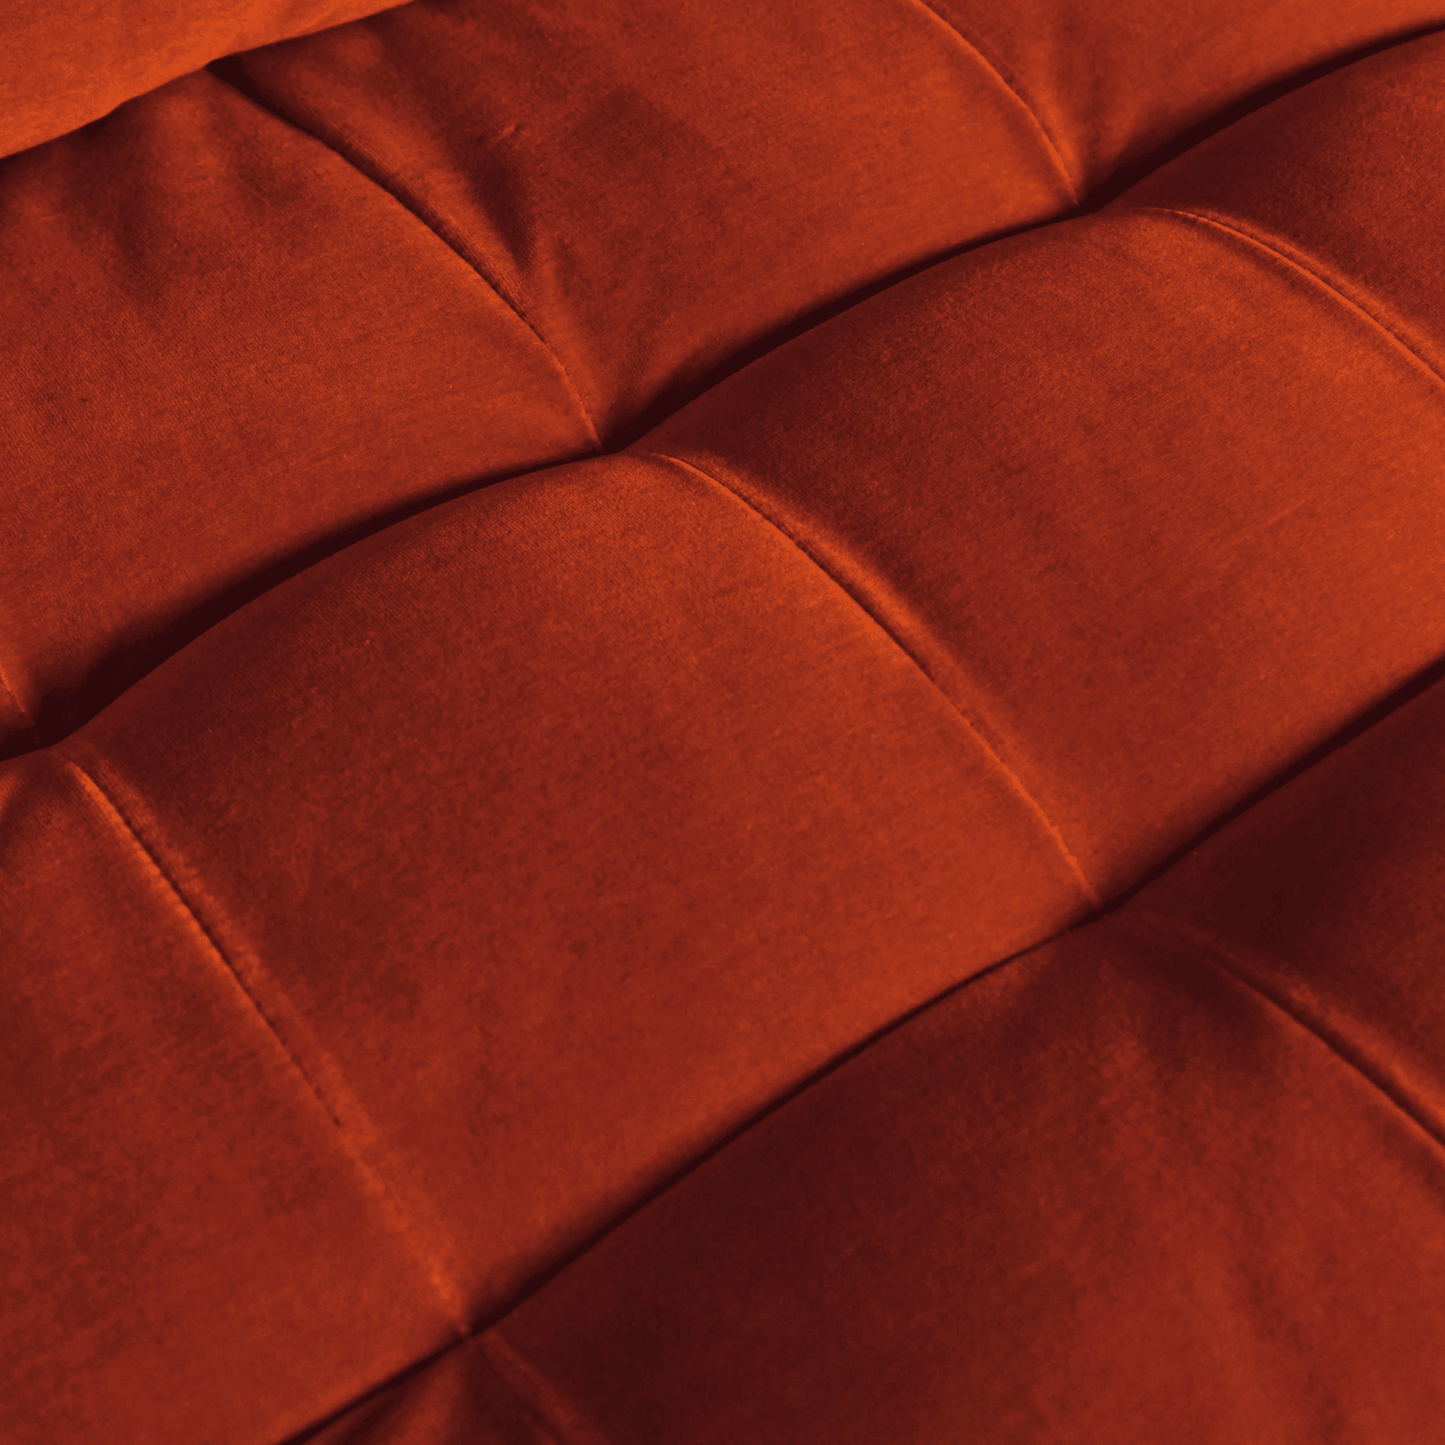 Burnt Orange Cotton Velvet Swatch - Flown the Coop